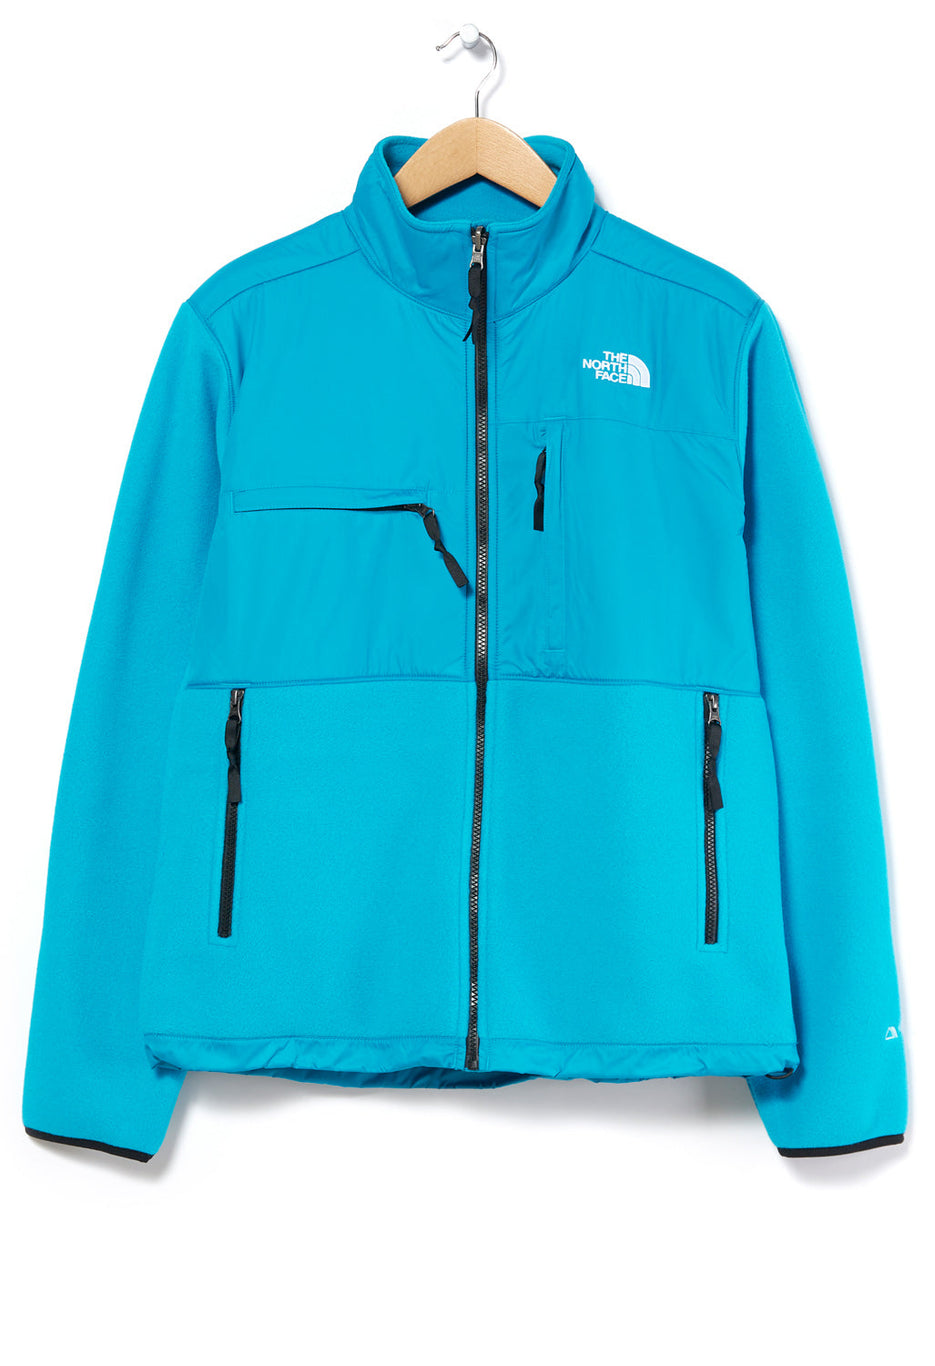 The North Face Denali Men's Jacket - Shady Blue – Outsiders Store UK